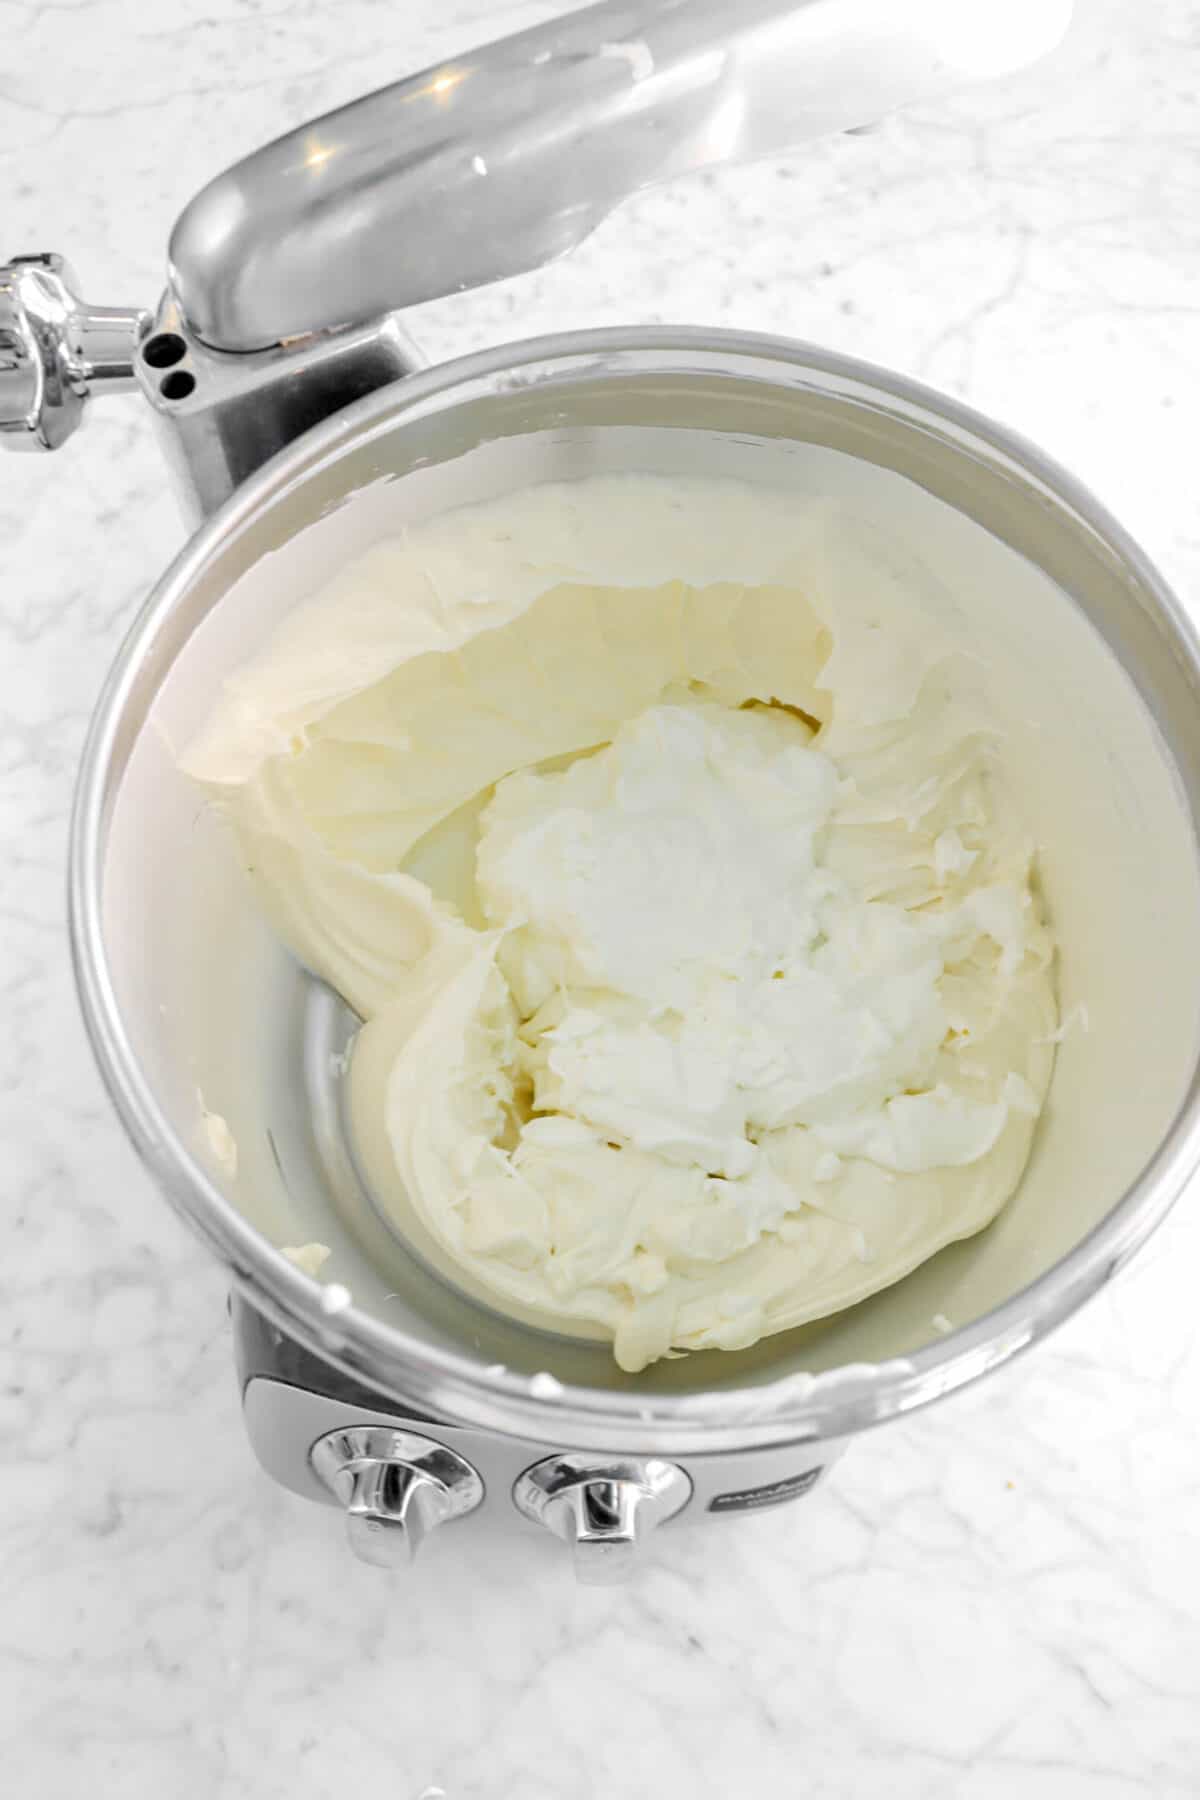 whipped cream added to cream cheese mixture